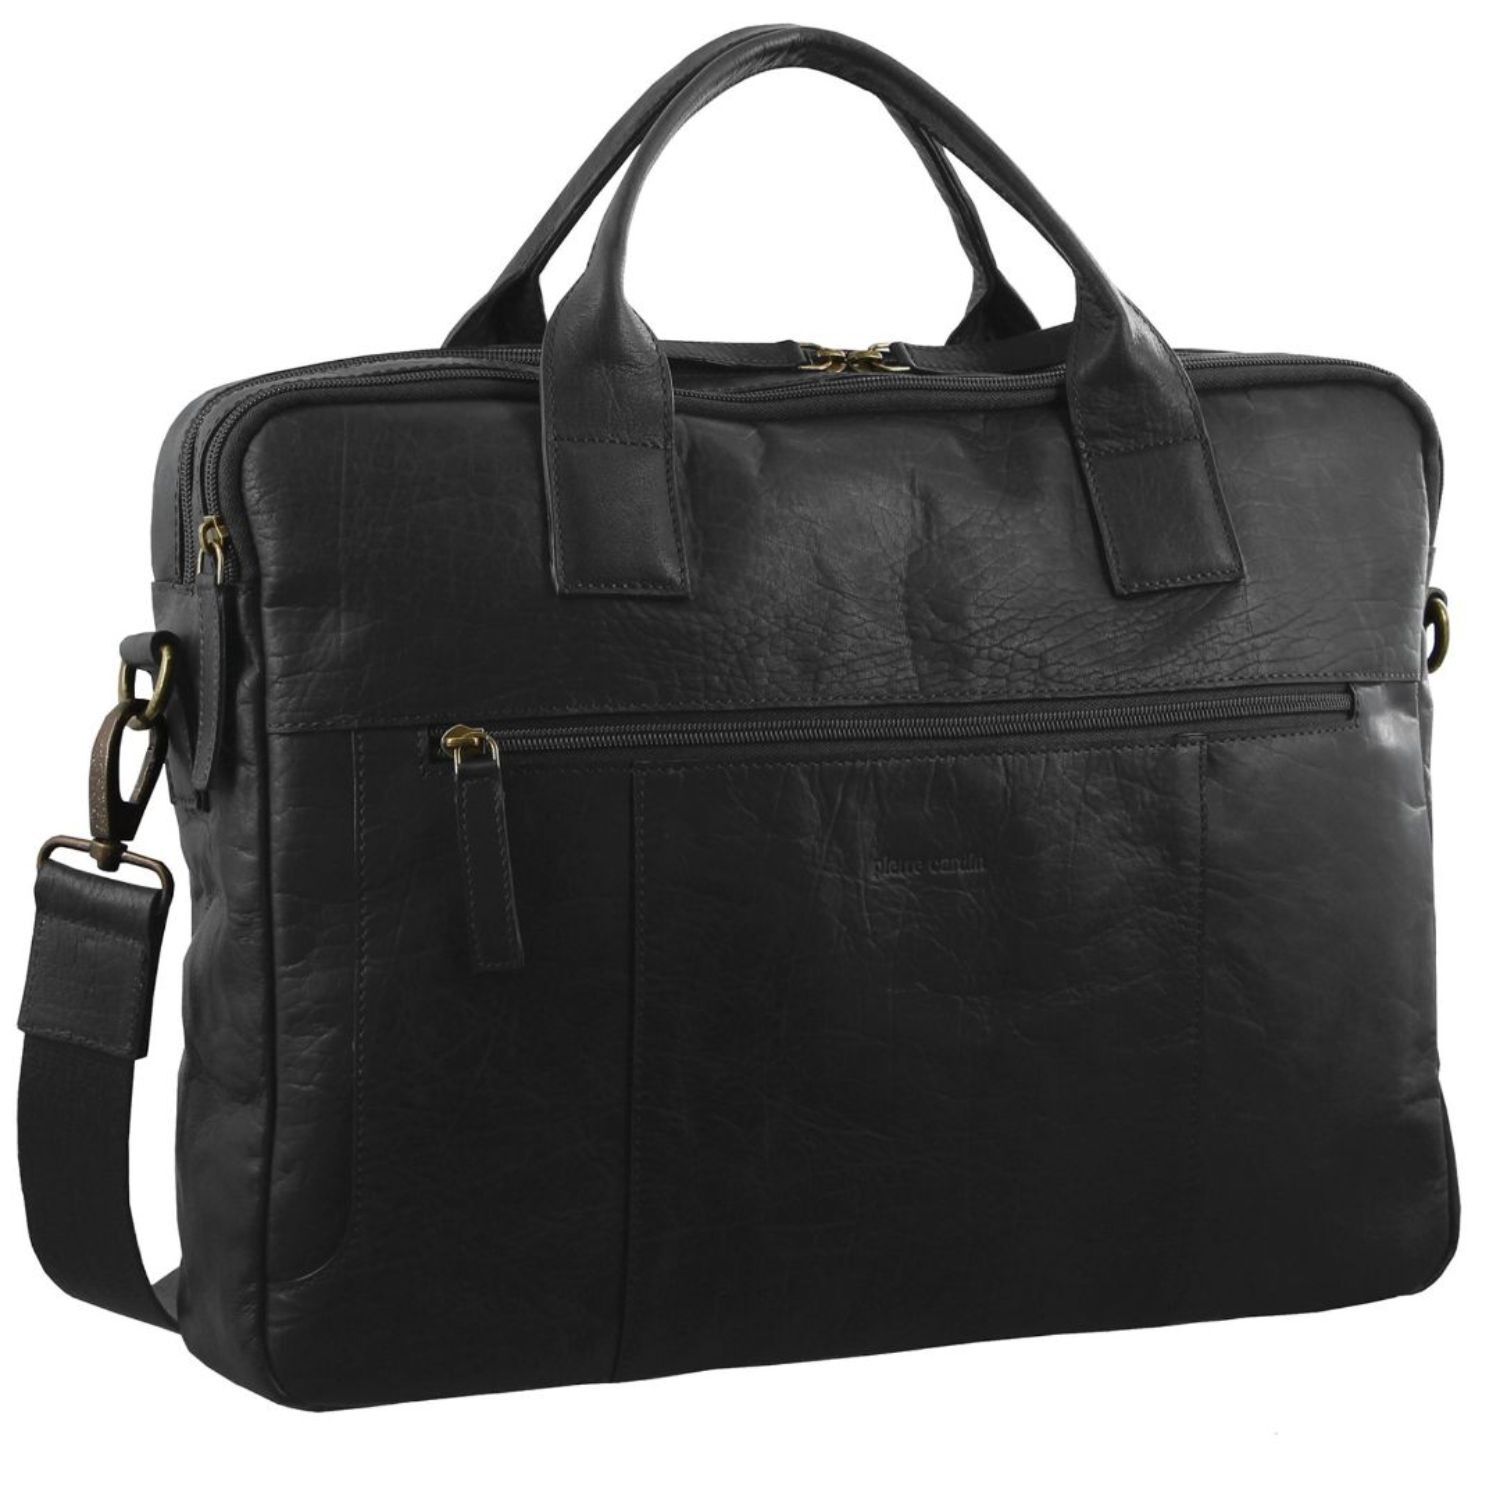 Pierre Cardin Rustic Italian Leather Business / Computer Bag PC 2807